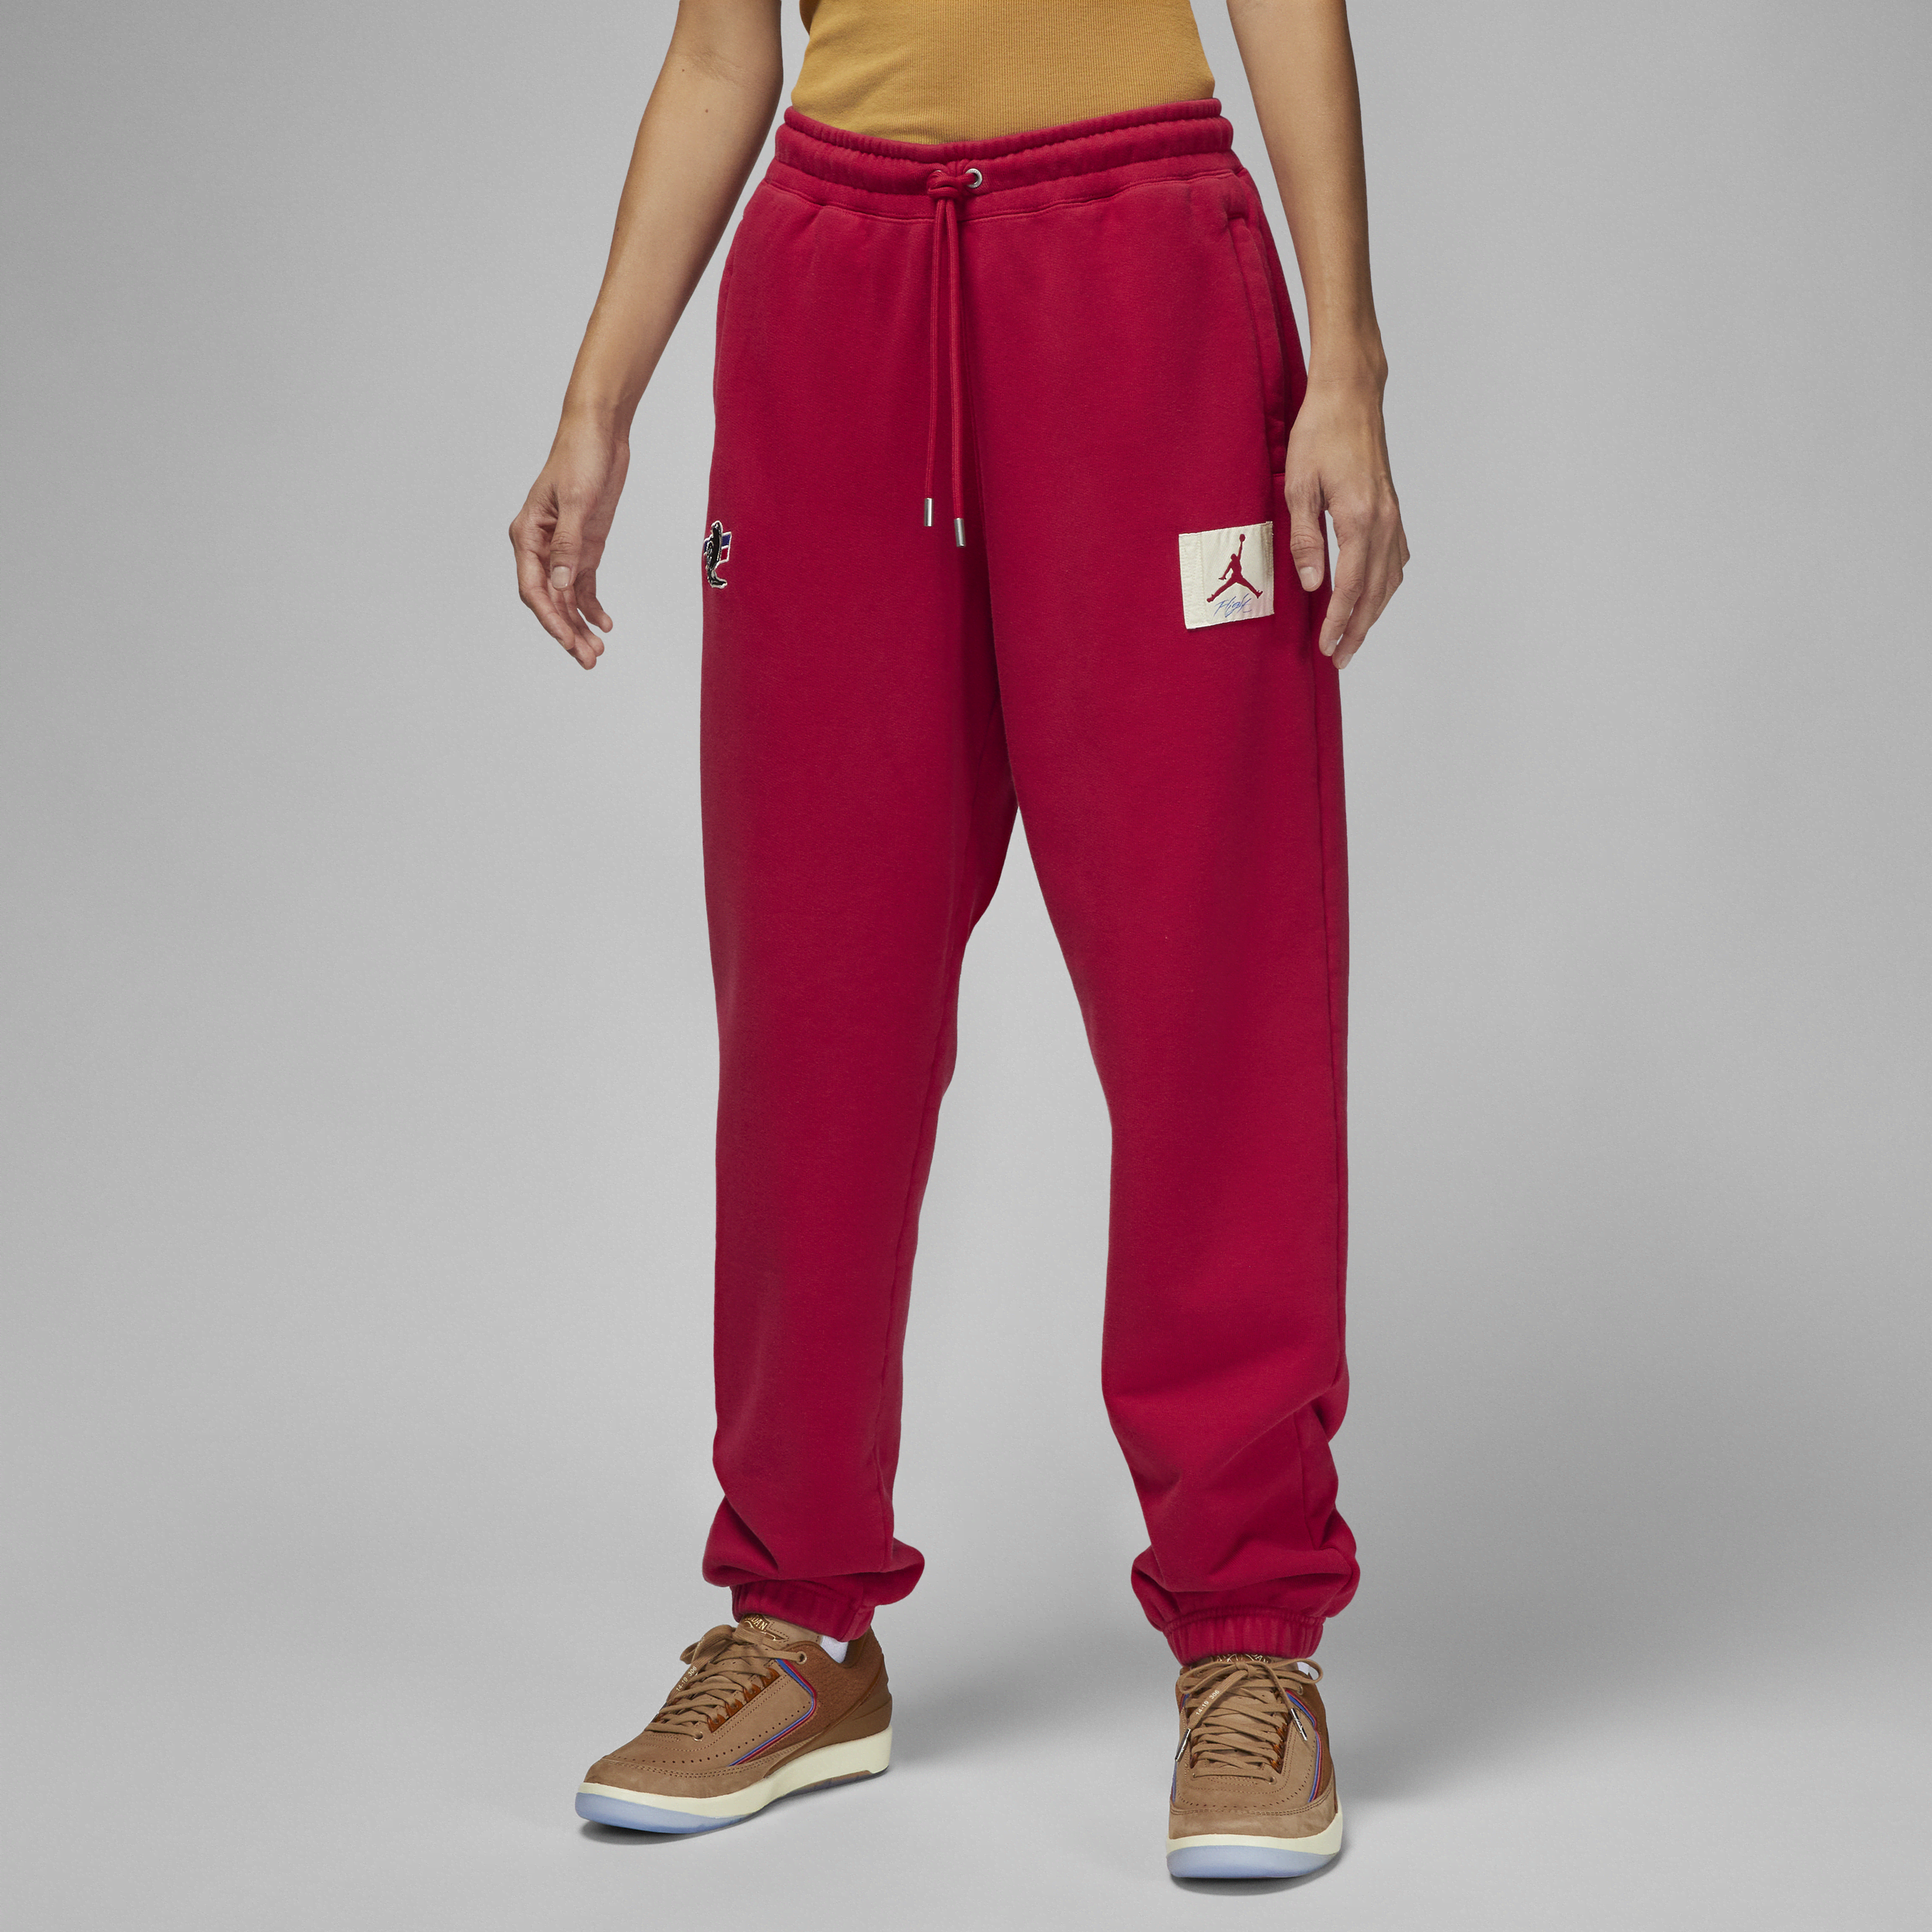 Jordan x Two 18-bukser til kvinder - rød